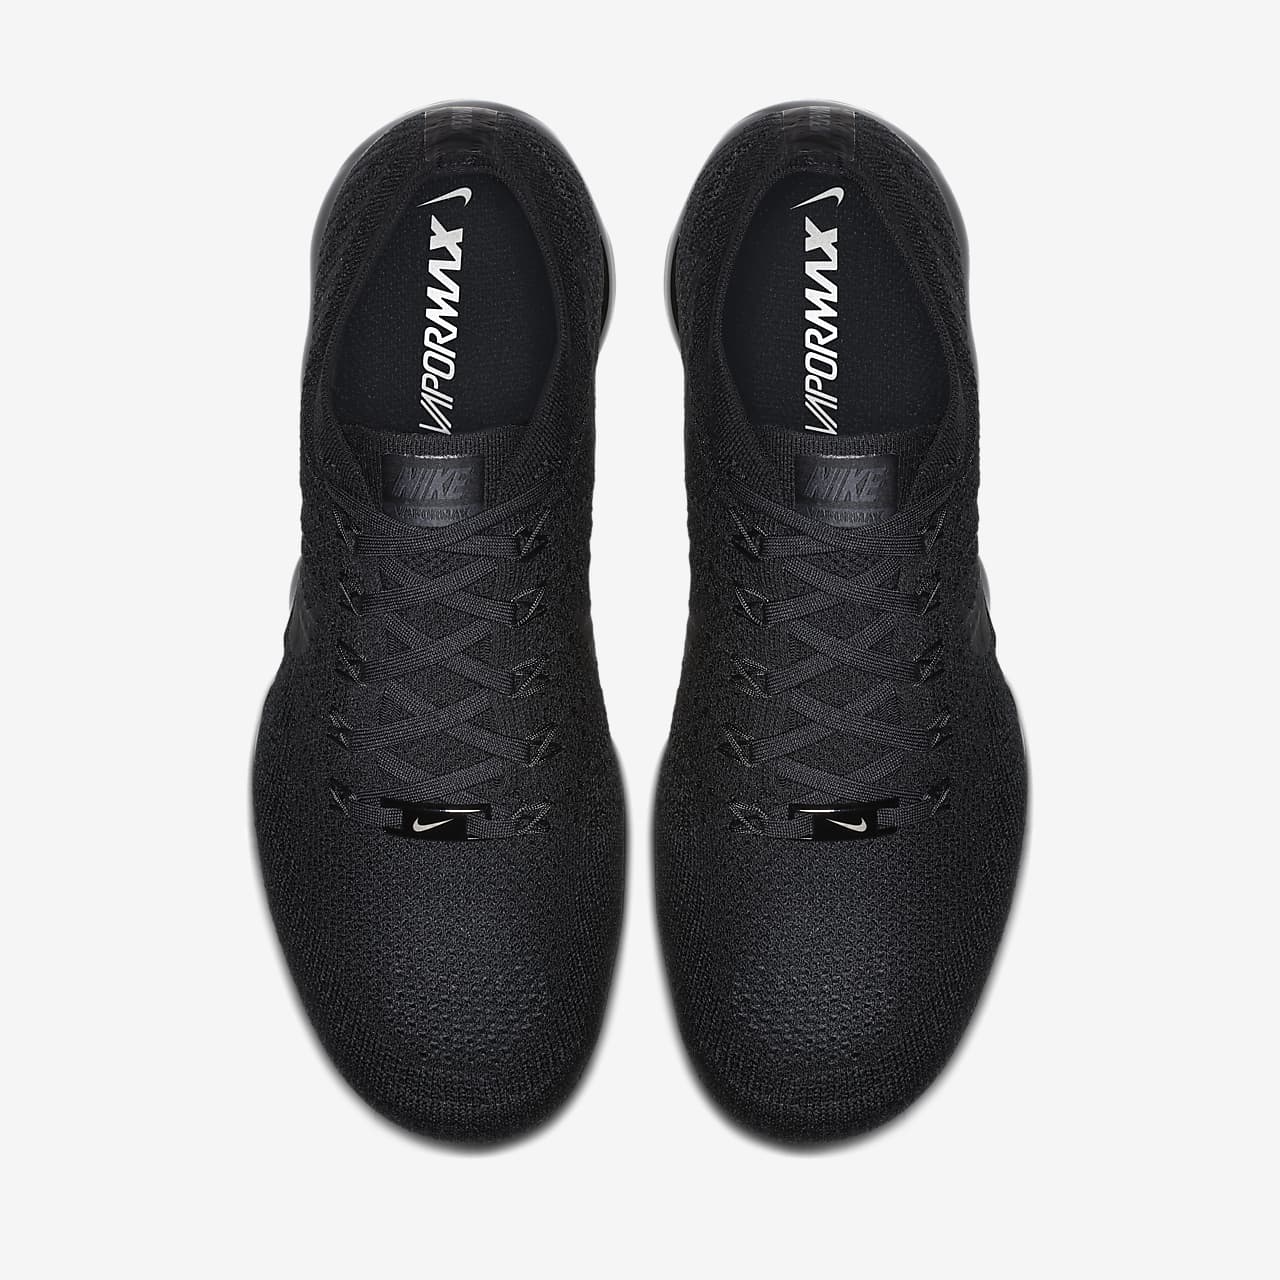 nike men's air vapormax flyknit running shoes